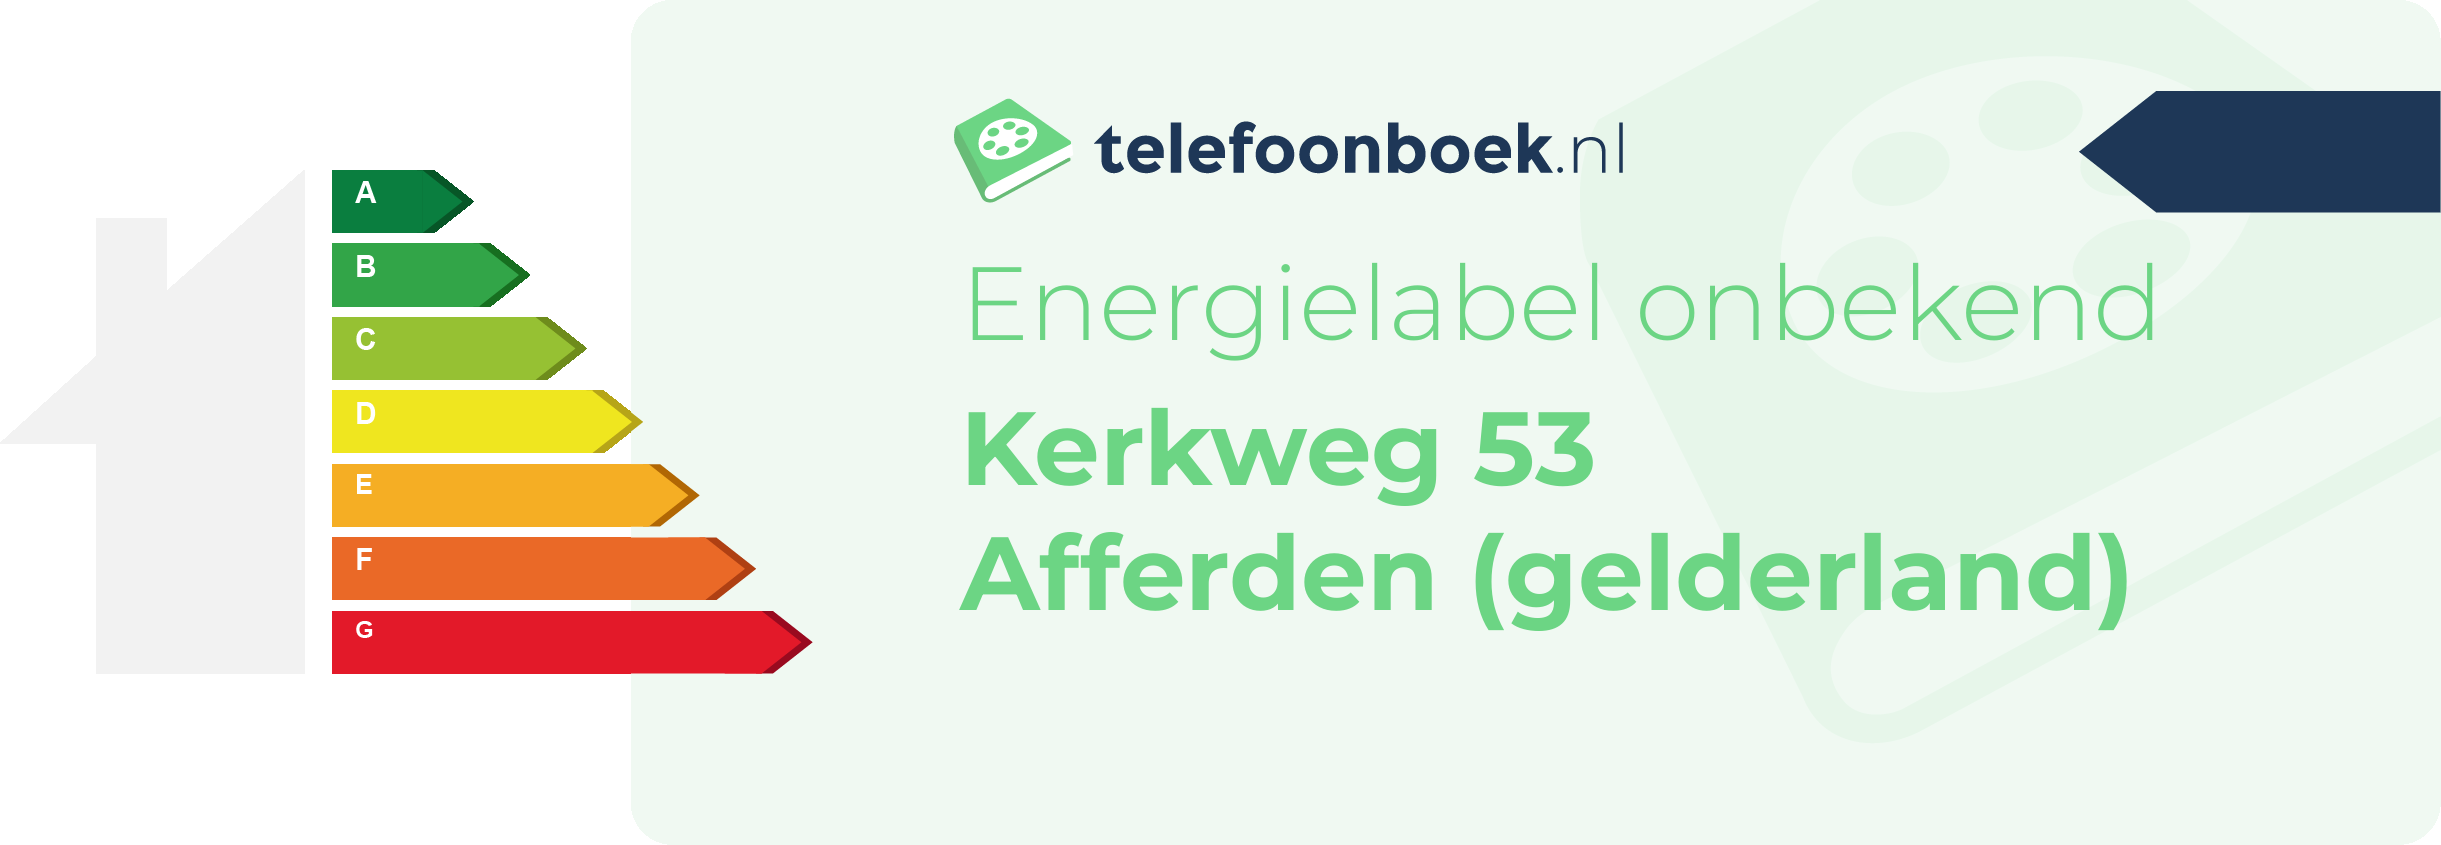 Energielabel Kerkweg 53 Afferden (Gelderland)